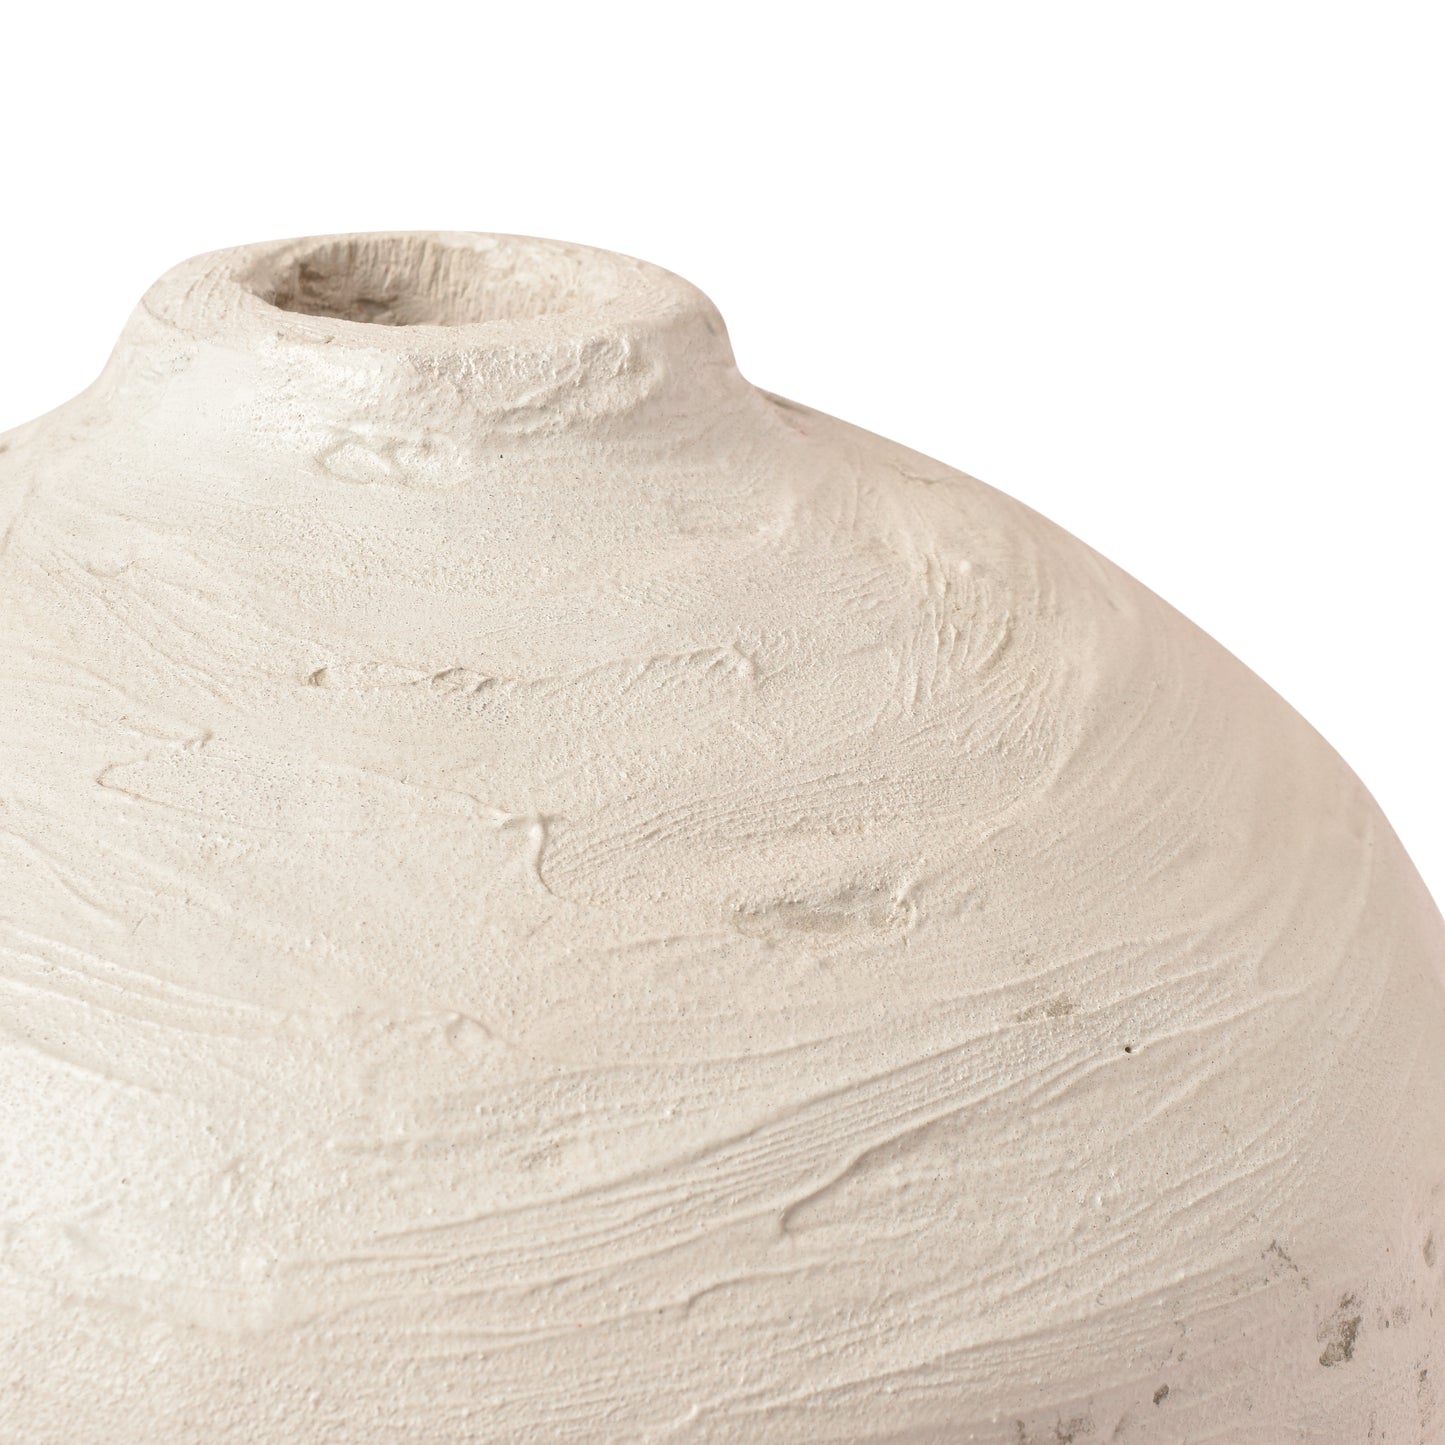 White Rough Texture Flower Vase/Pot-HOMENEARTH